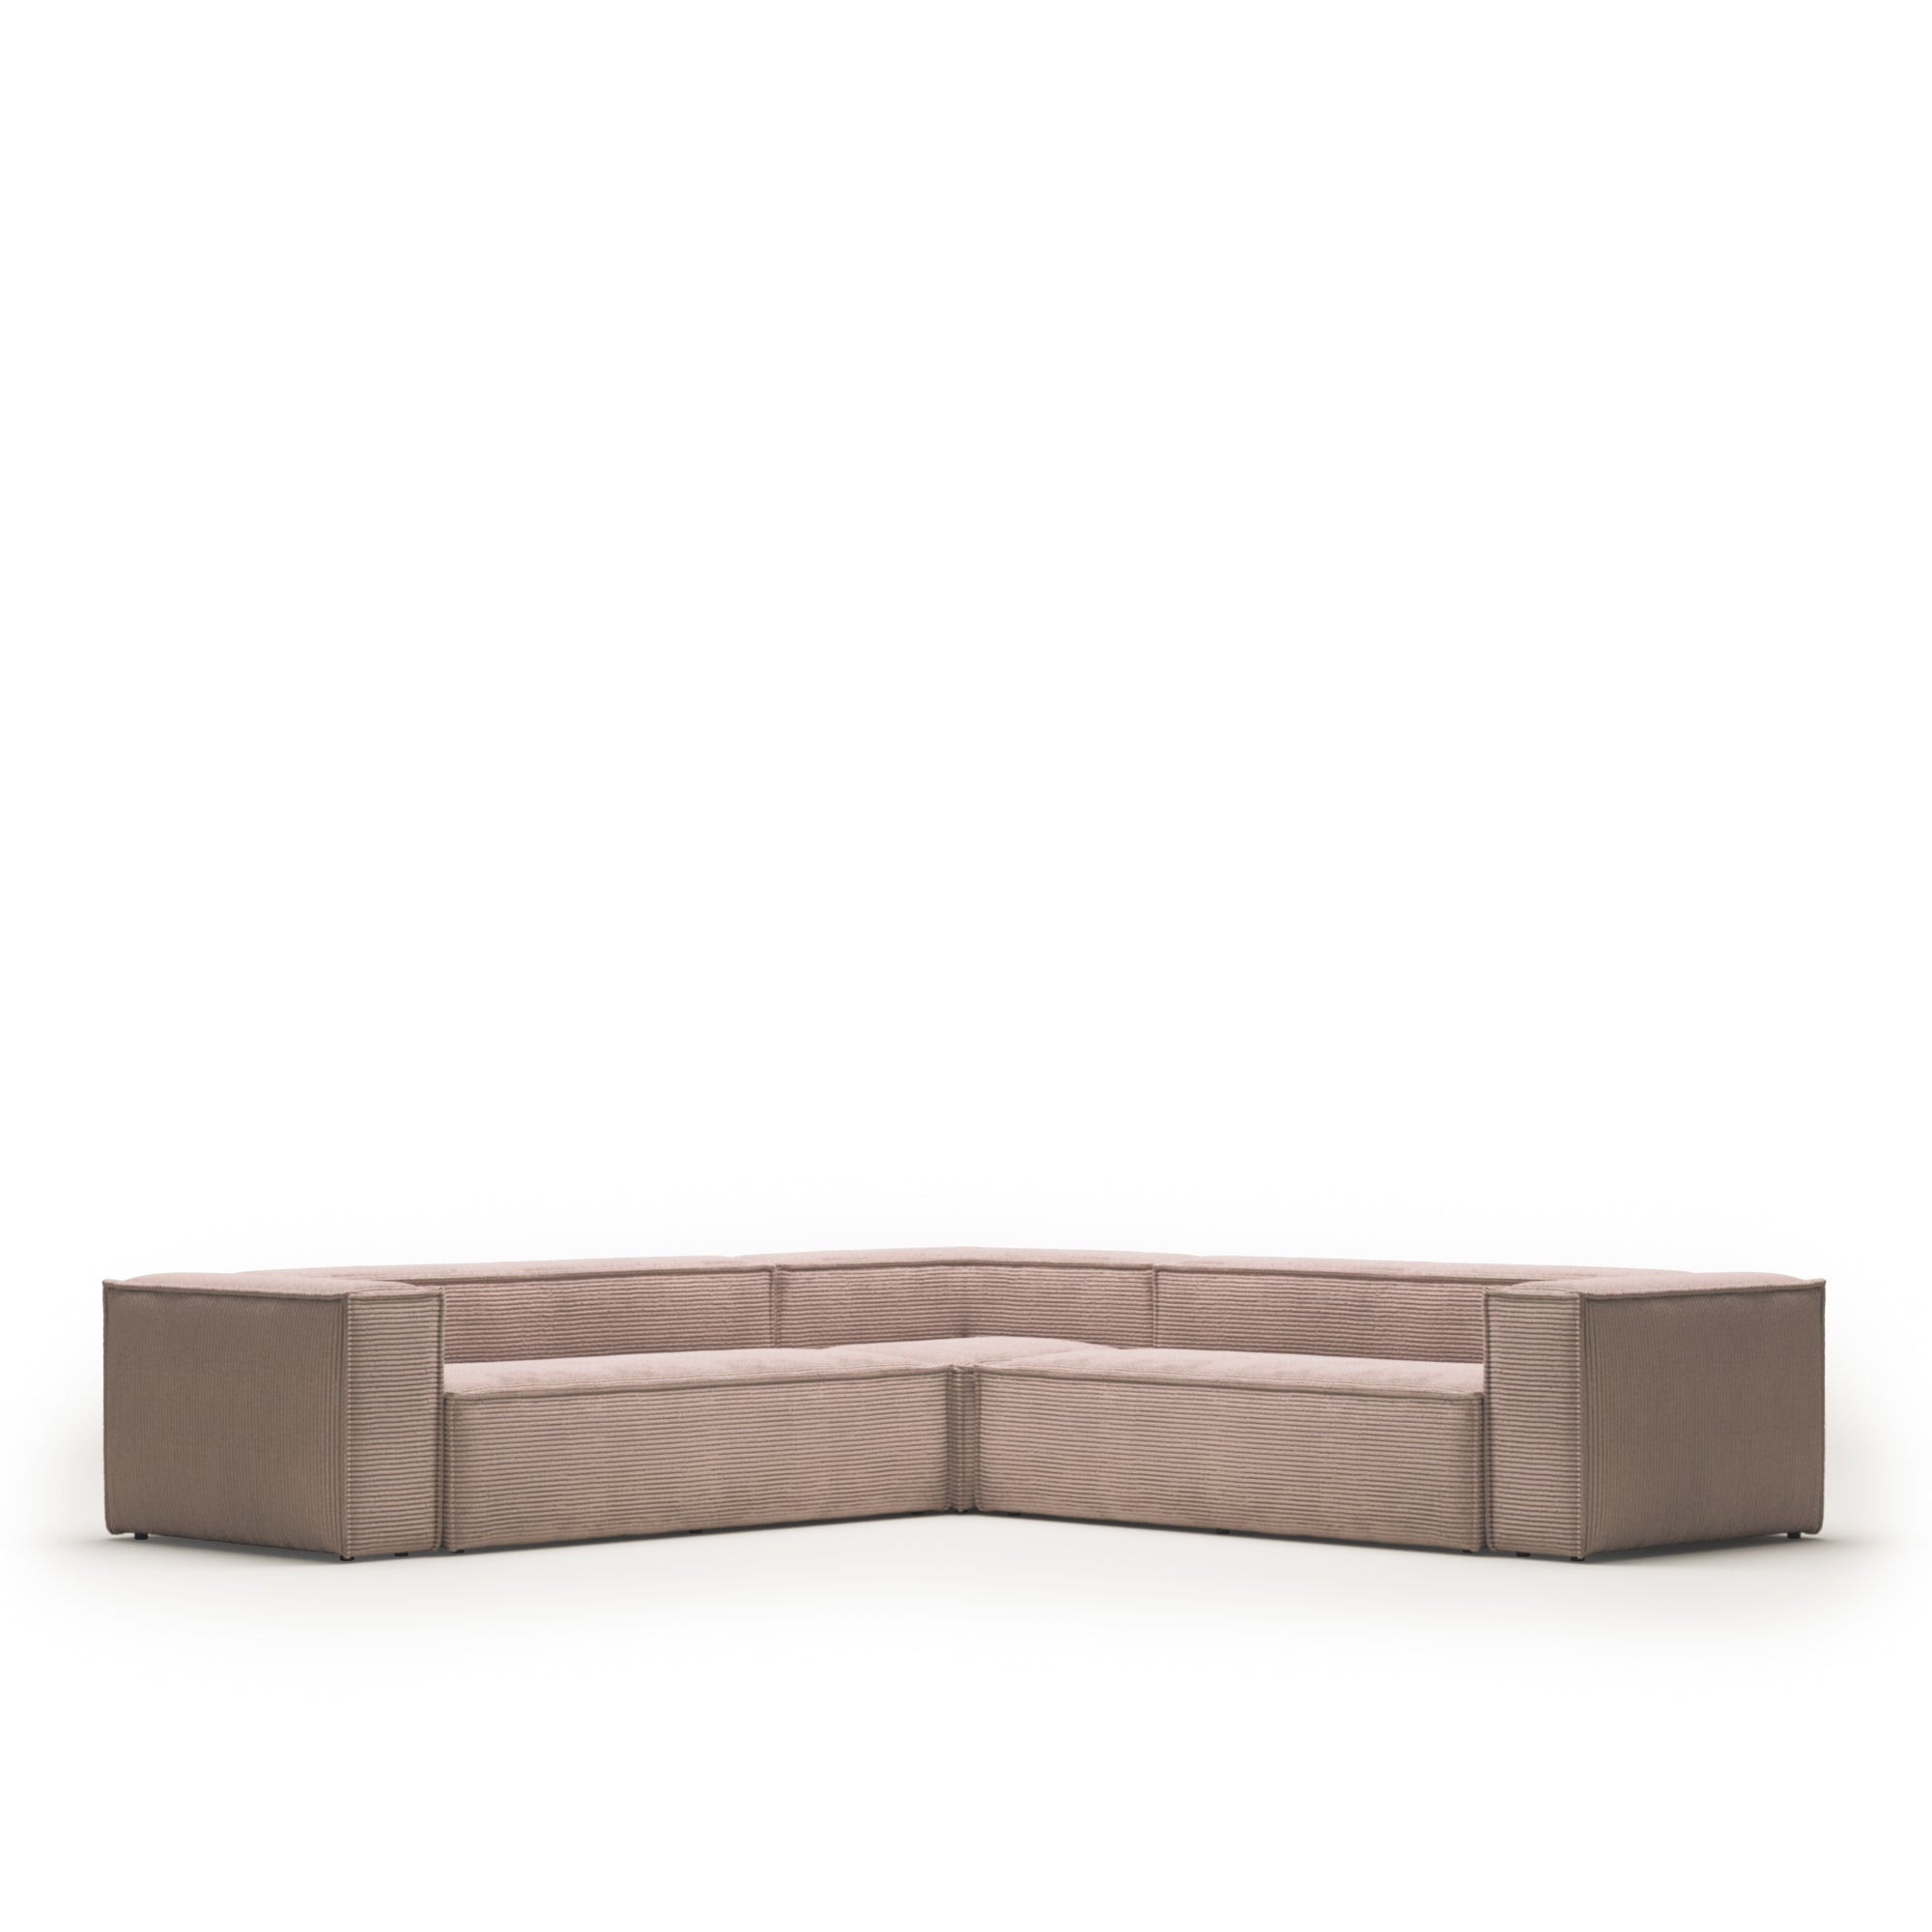 Blok 6 seater corner sofa in pink wide seam corduroy, 320 x 320 cm